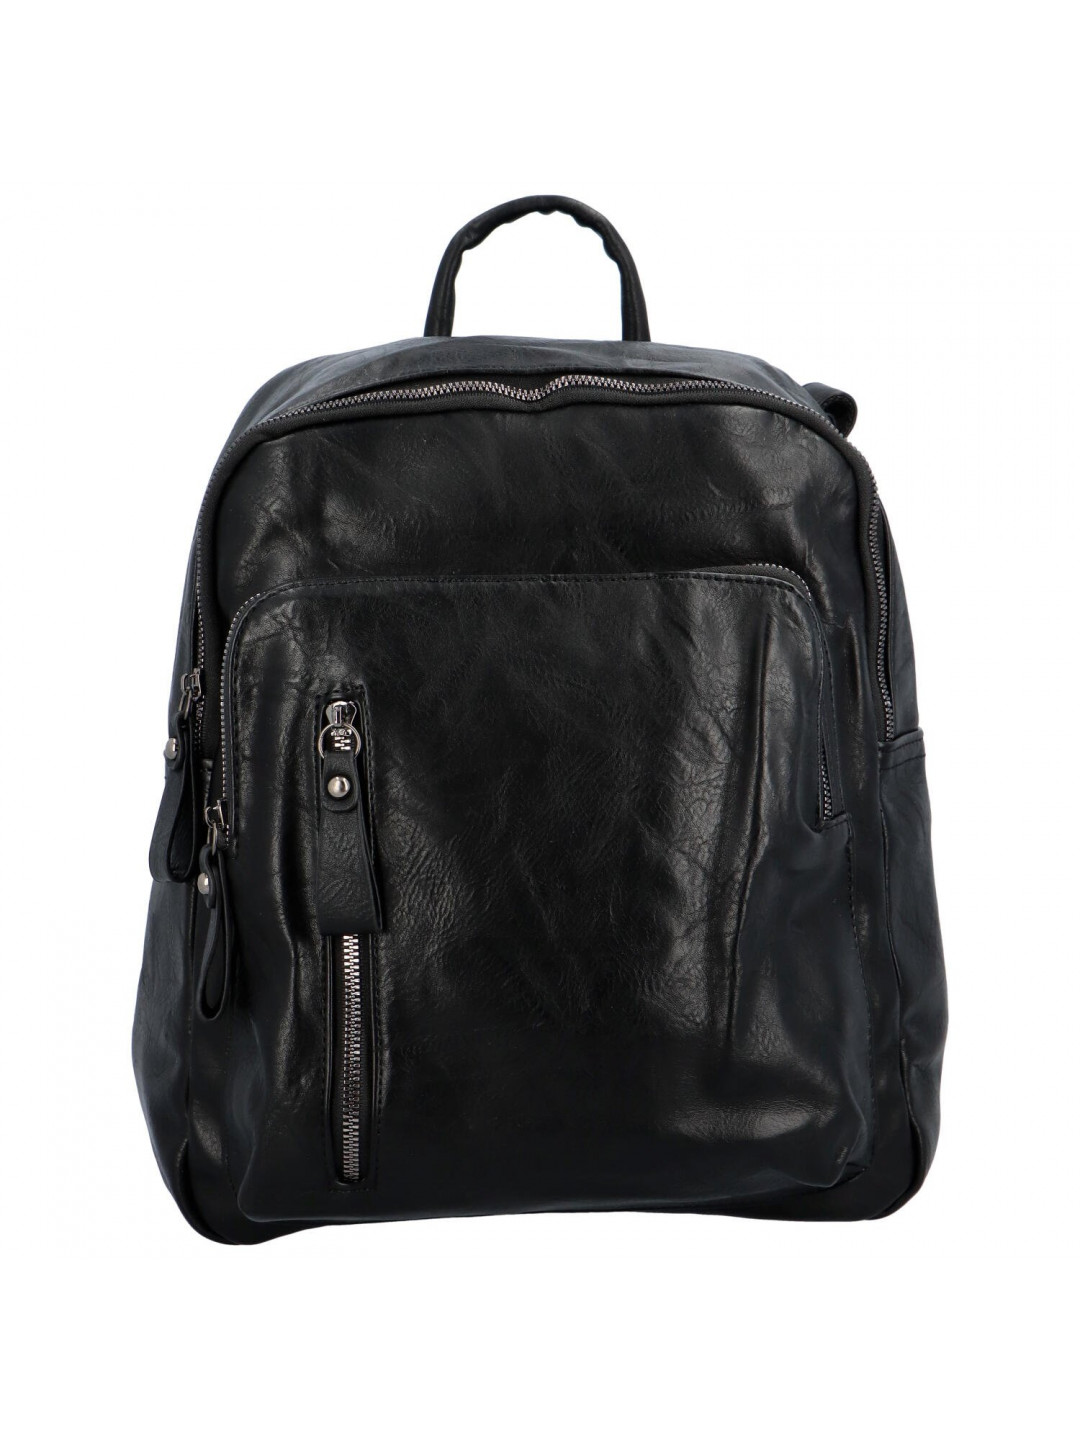 Stylový dámský koženkový batoh Octavio černá